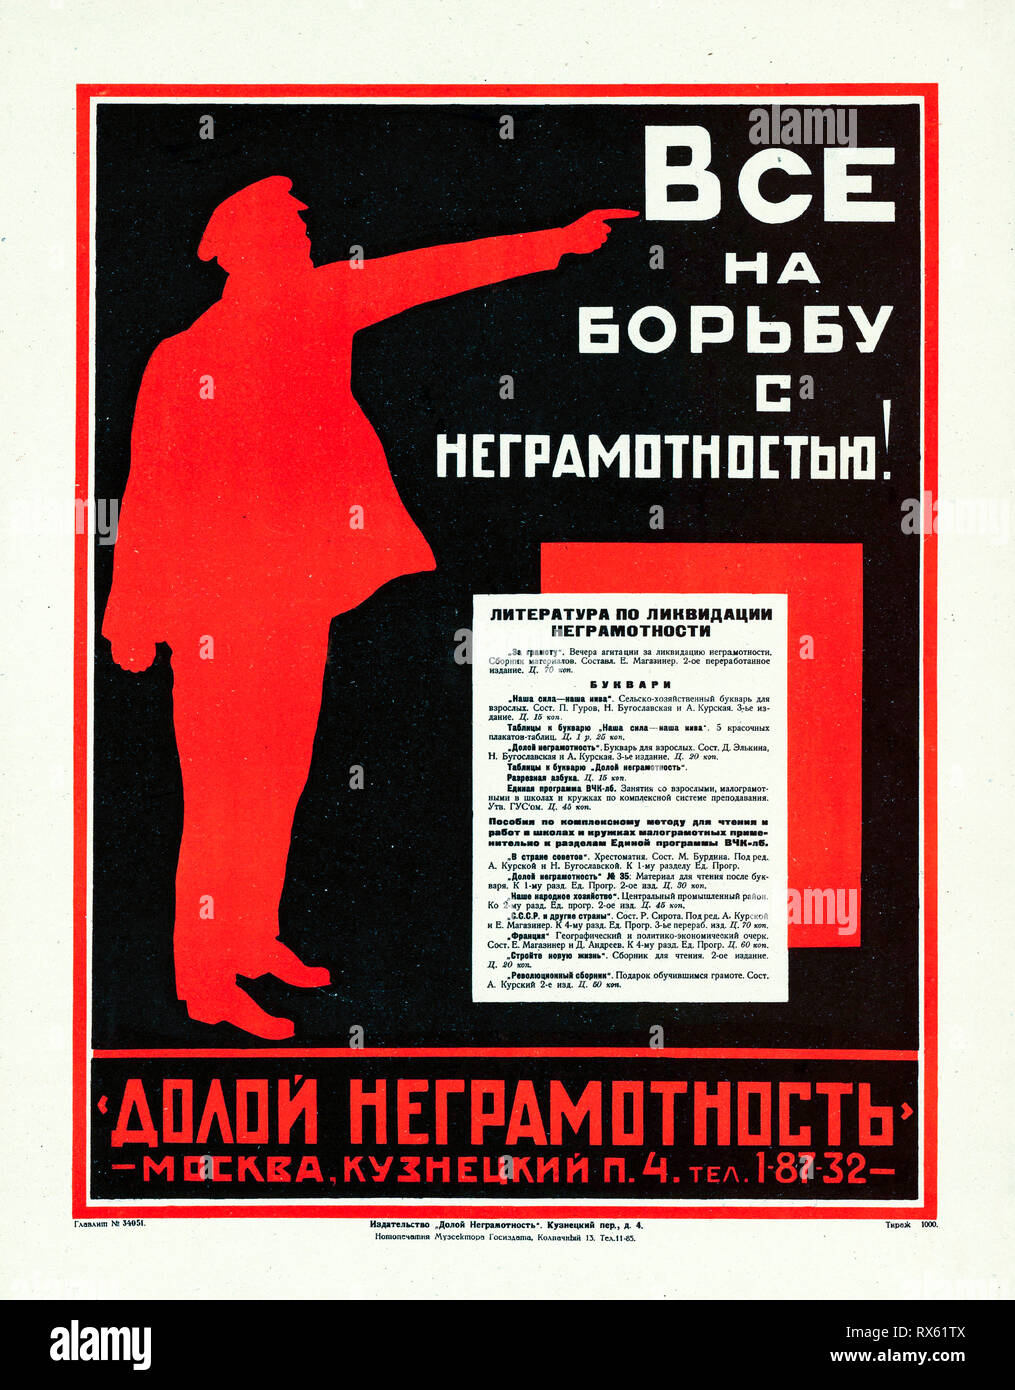 Lenin poster, pointing, All to fight illiteracy ! Literature on illiteracy eradication campaign, 1925 Stock Photo